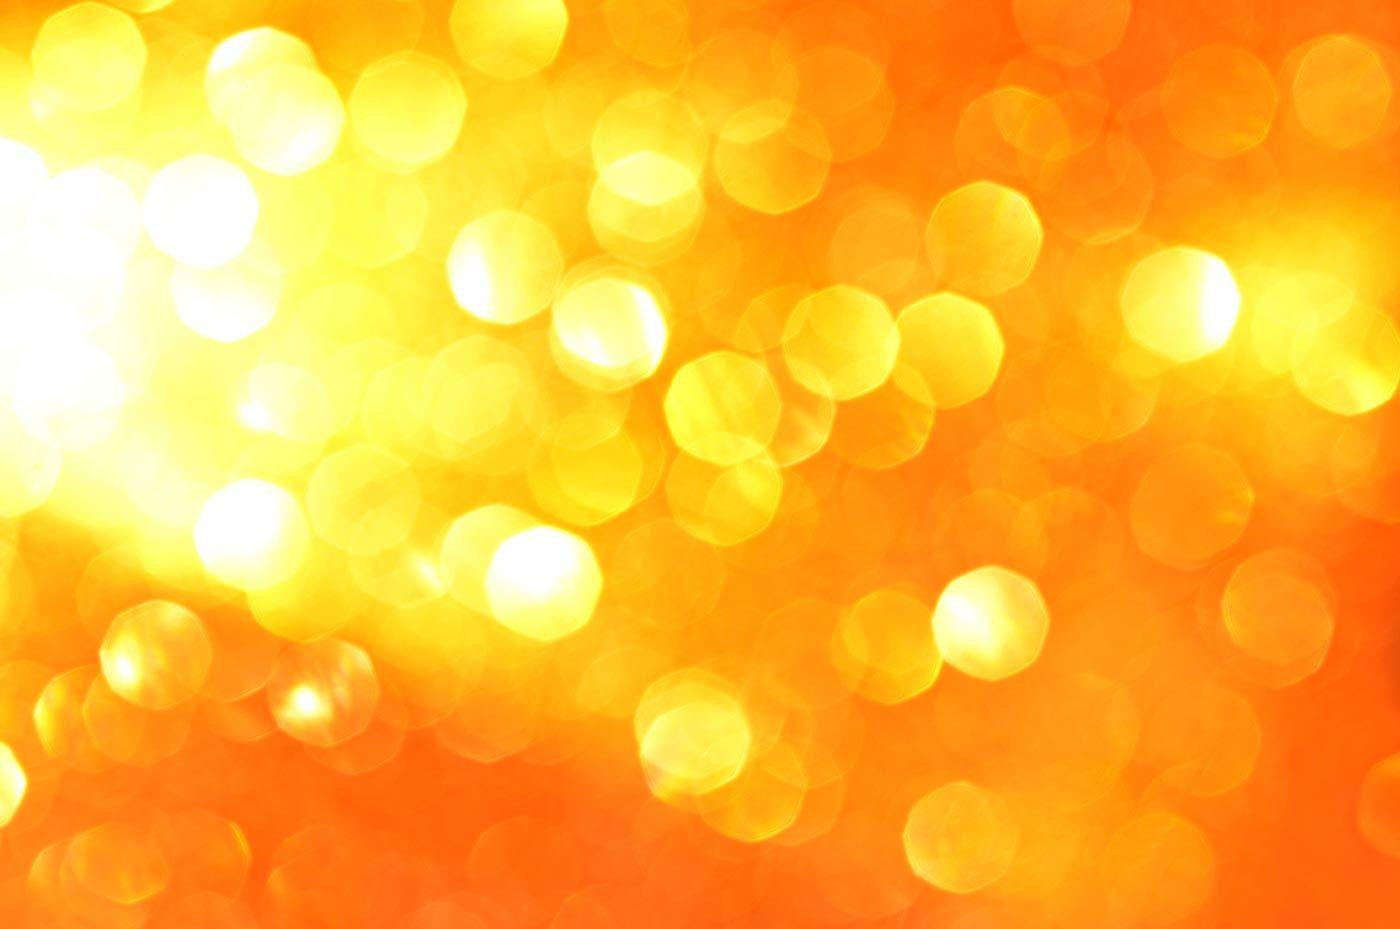 Light Orange Background Images  Free Download on Freepik